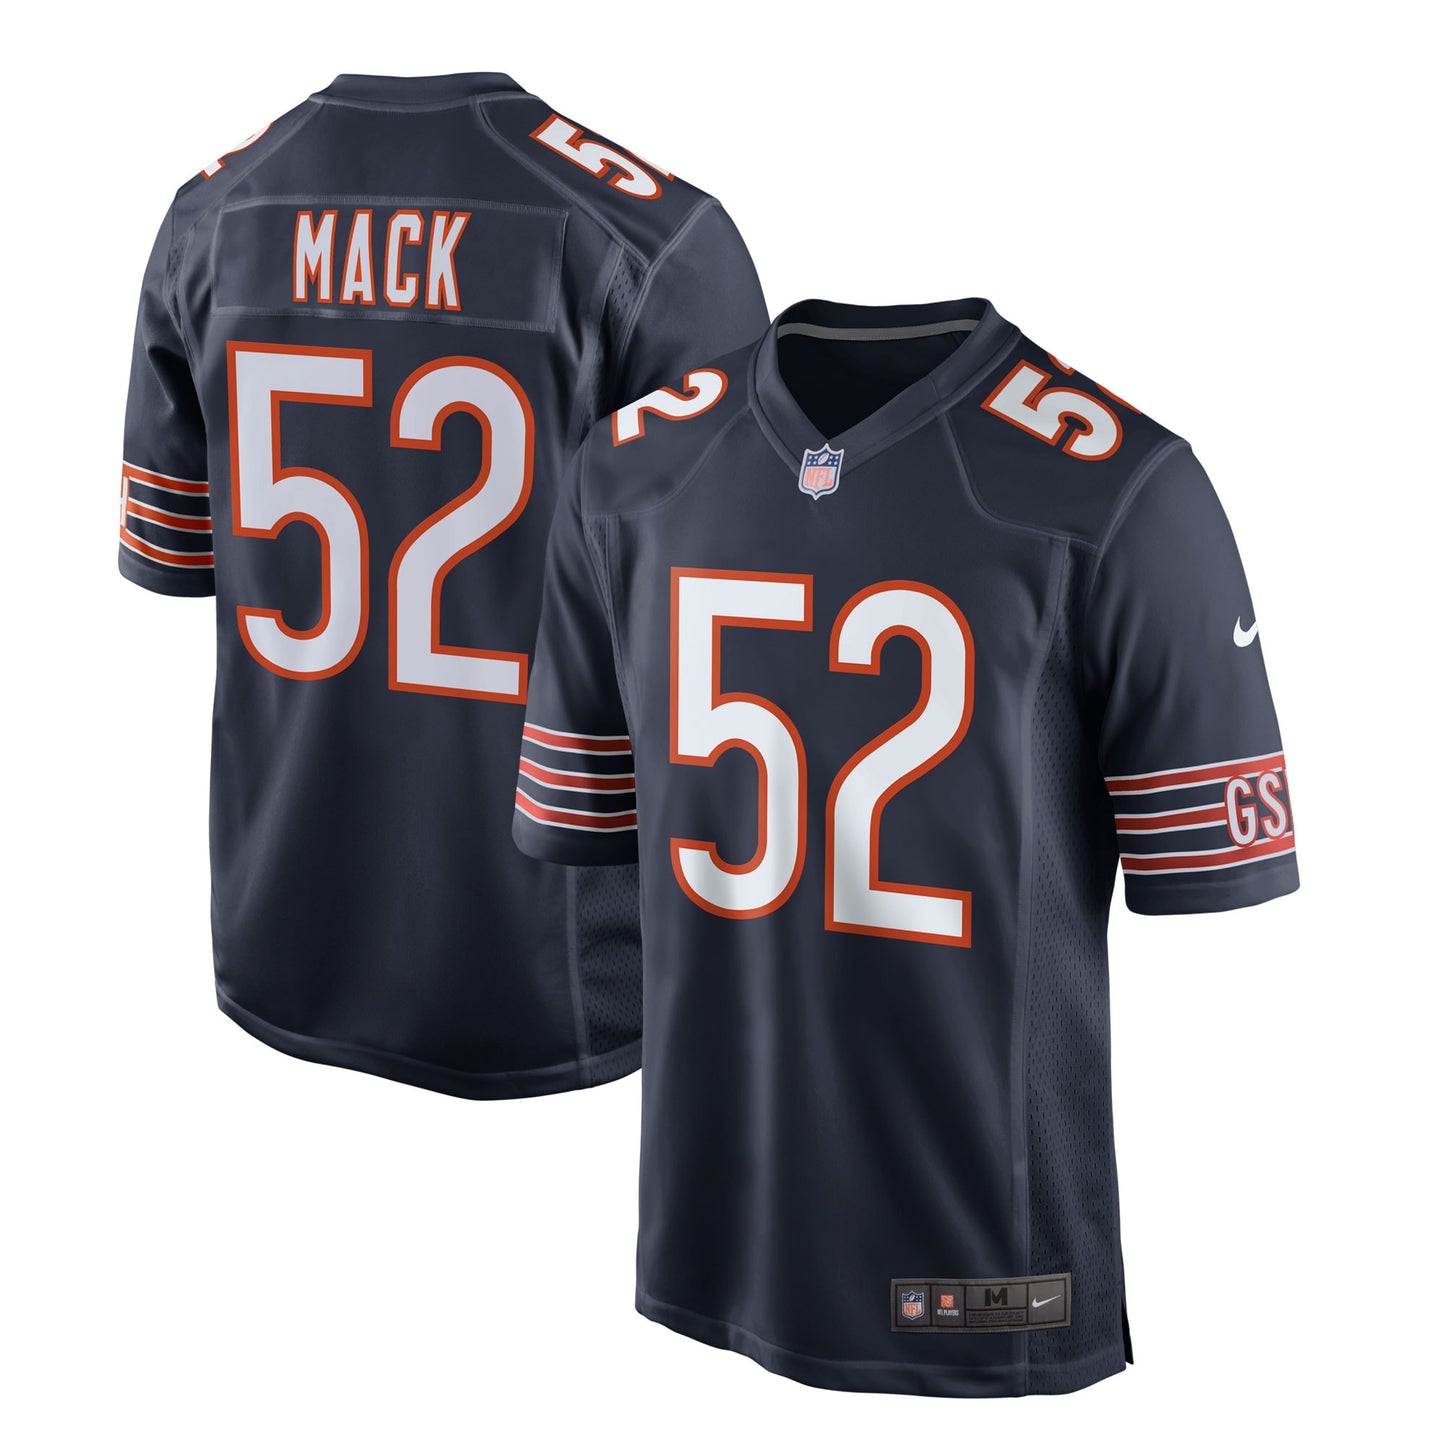 Khalil Mack Chicago Bears Nike Game Player Jersey - Navy